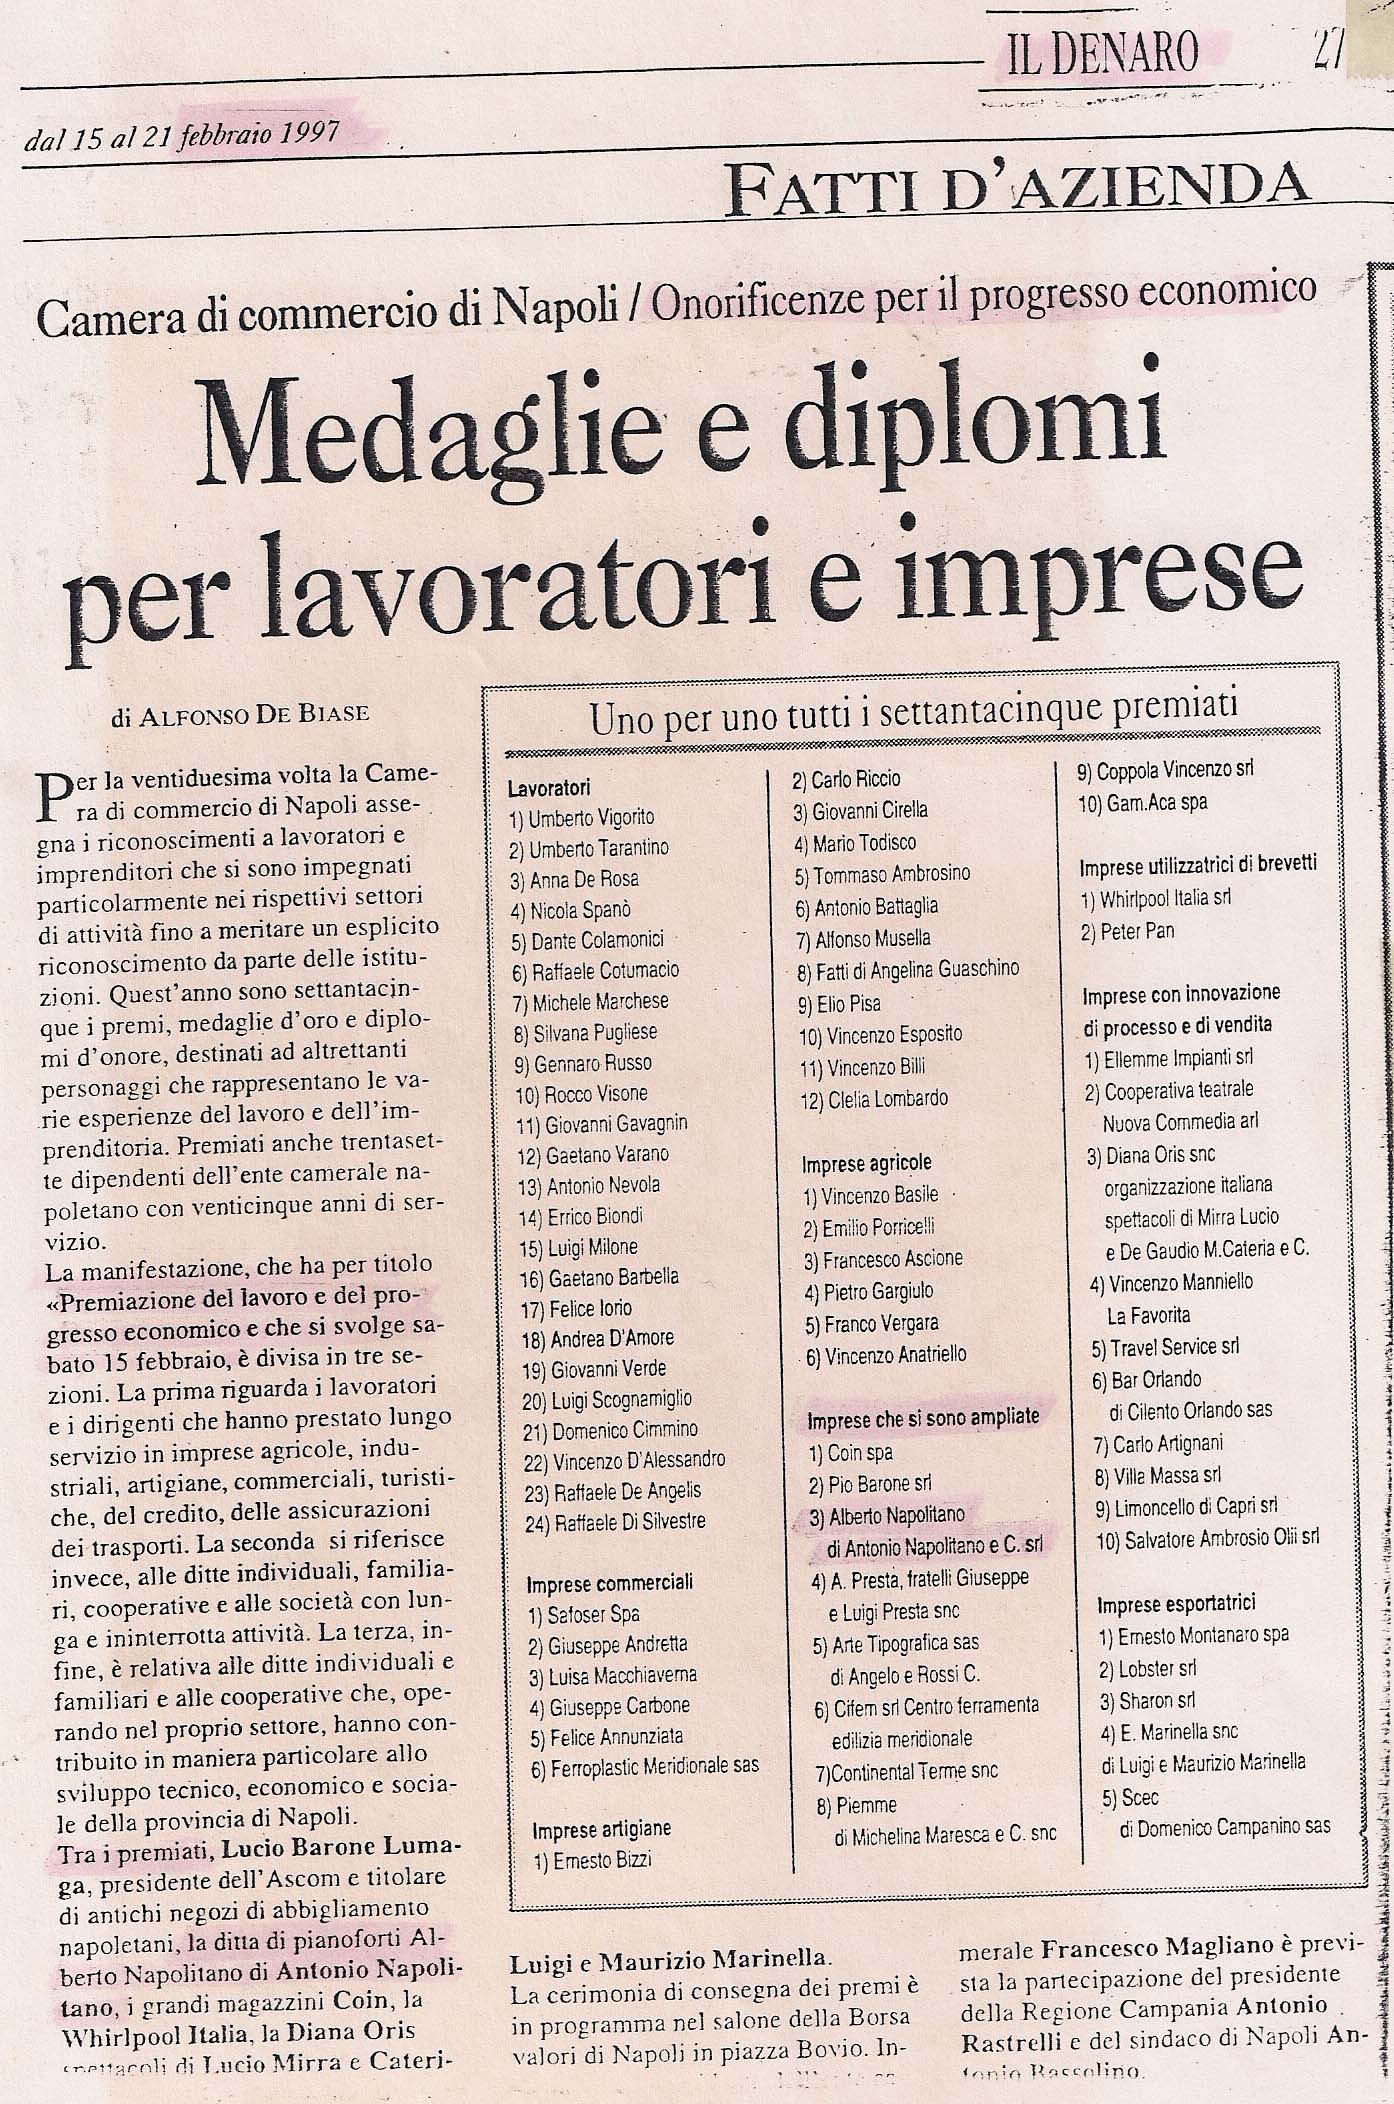 Medaglie-diplomi-1997-Alberto-Napolitano-Pianoforti-Napoli